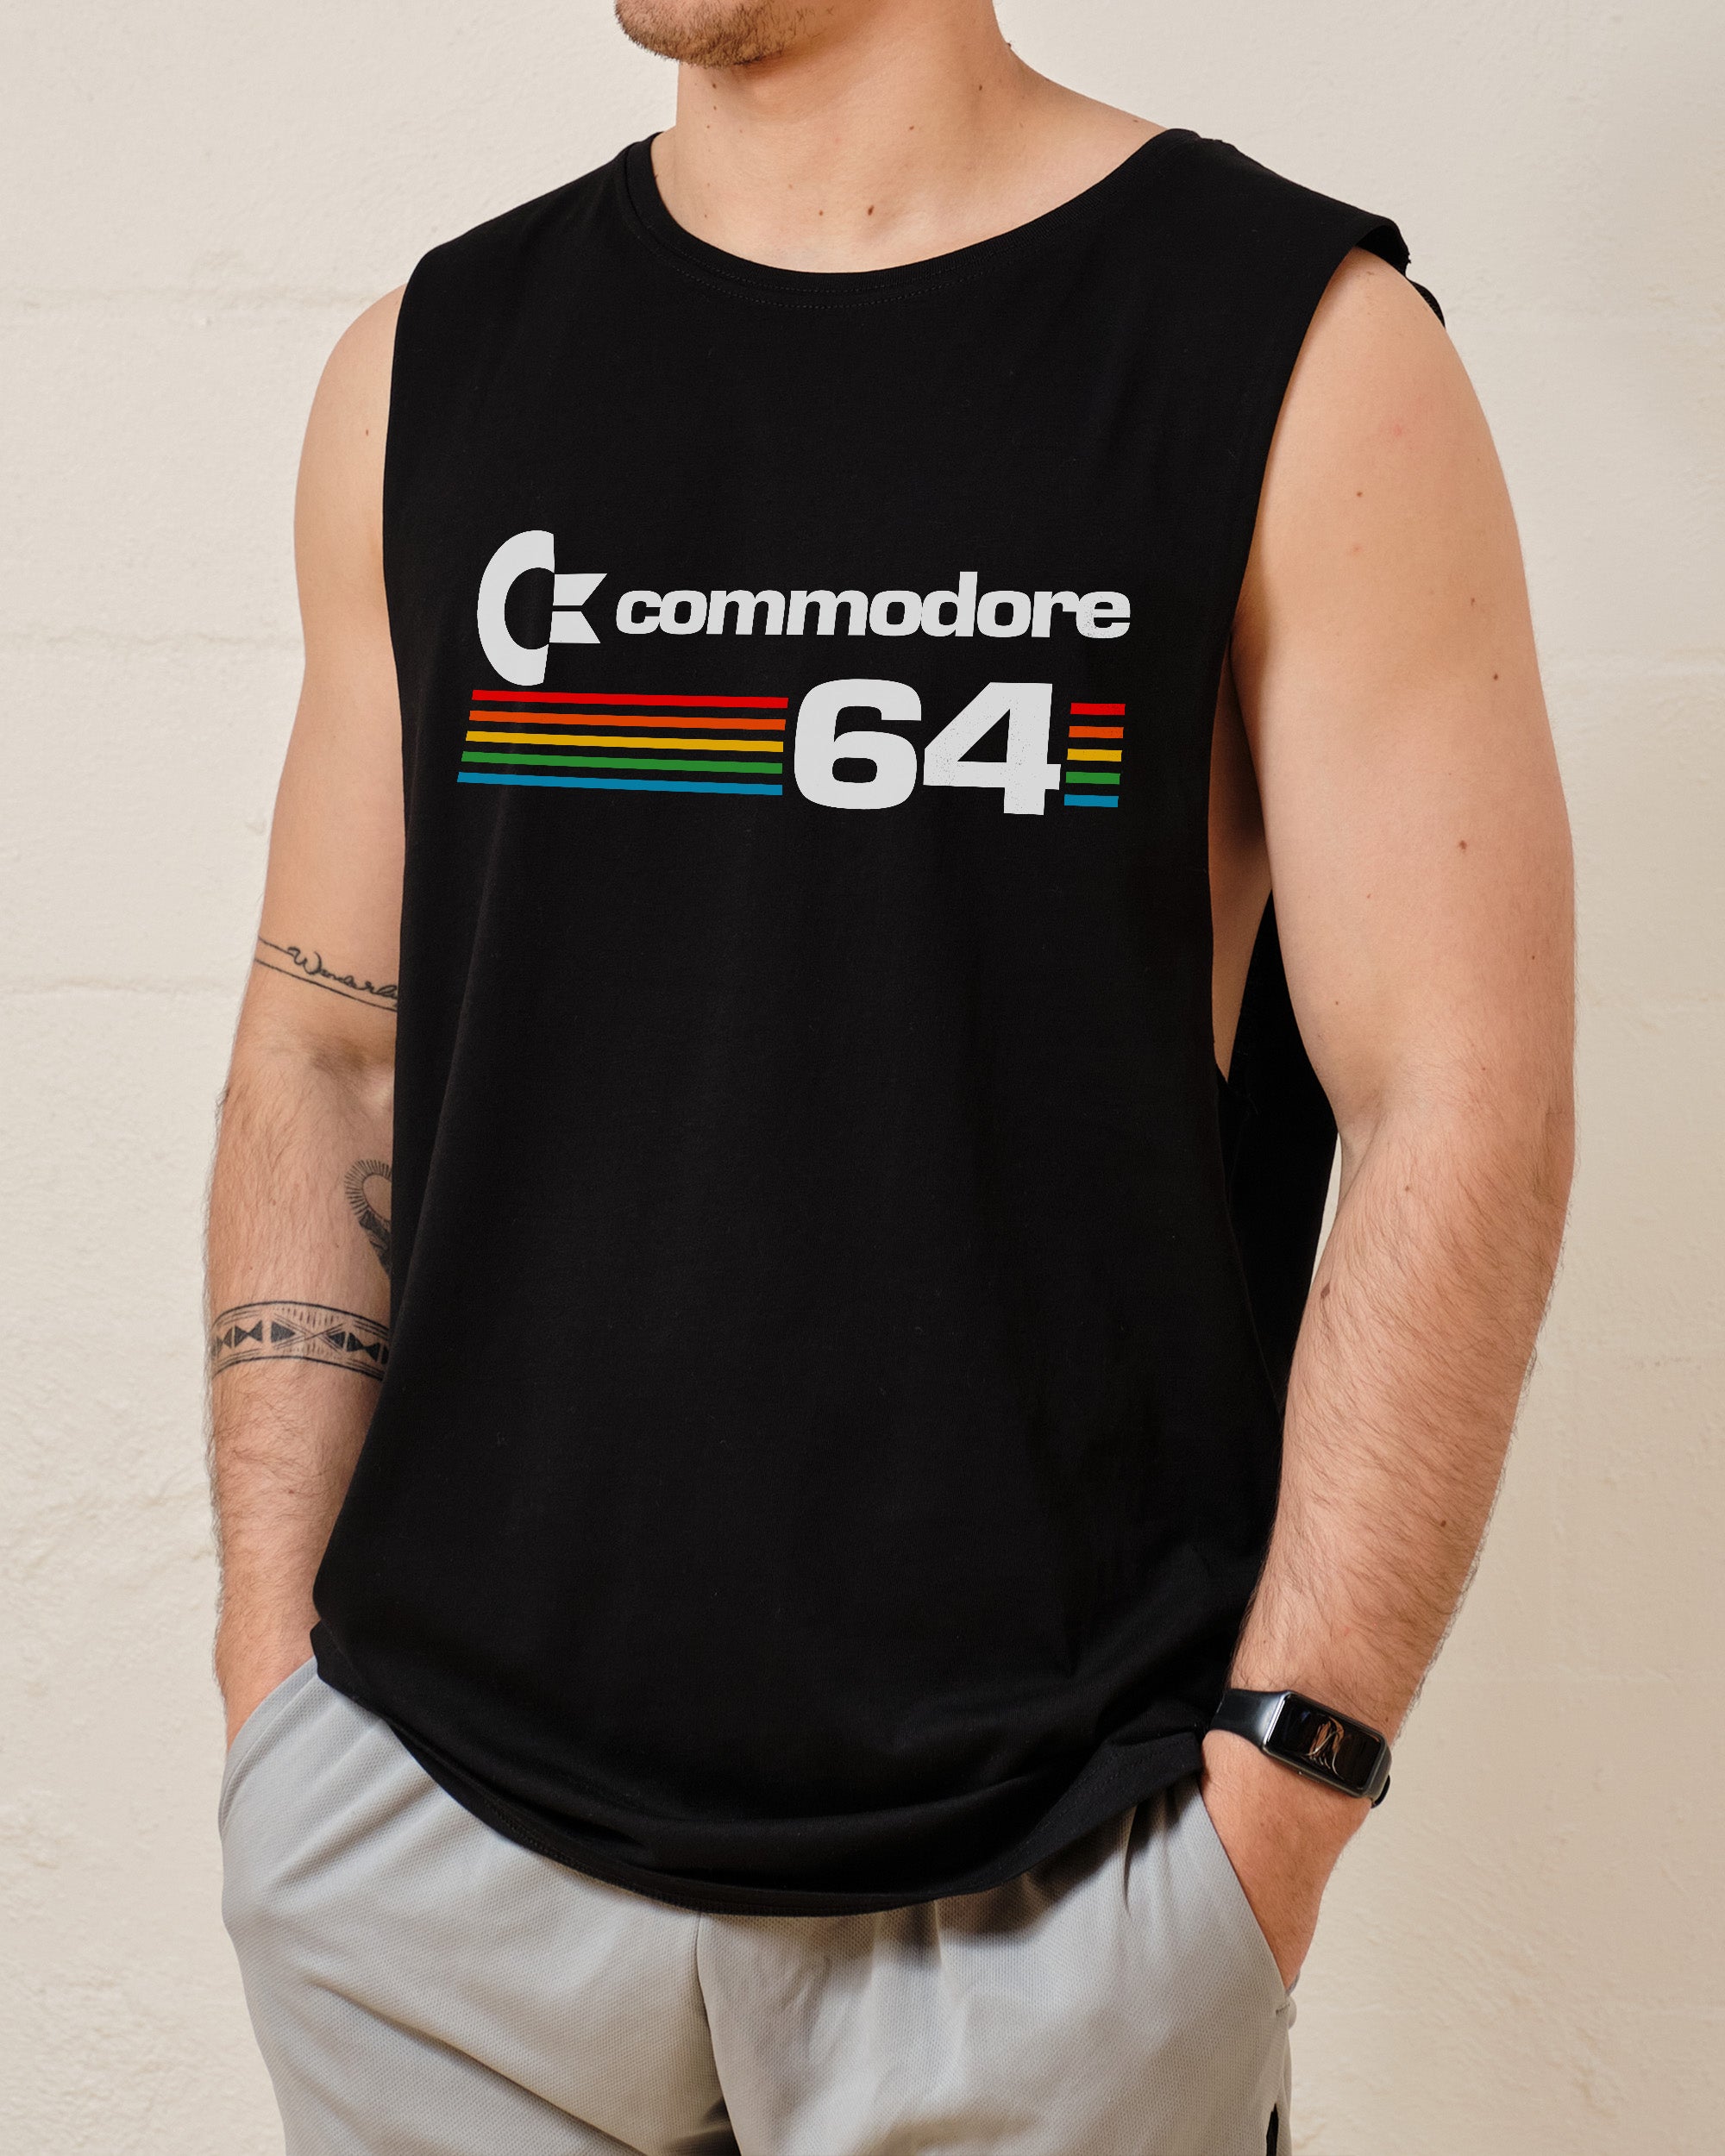 Commodore 64 Tank Australia Online